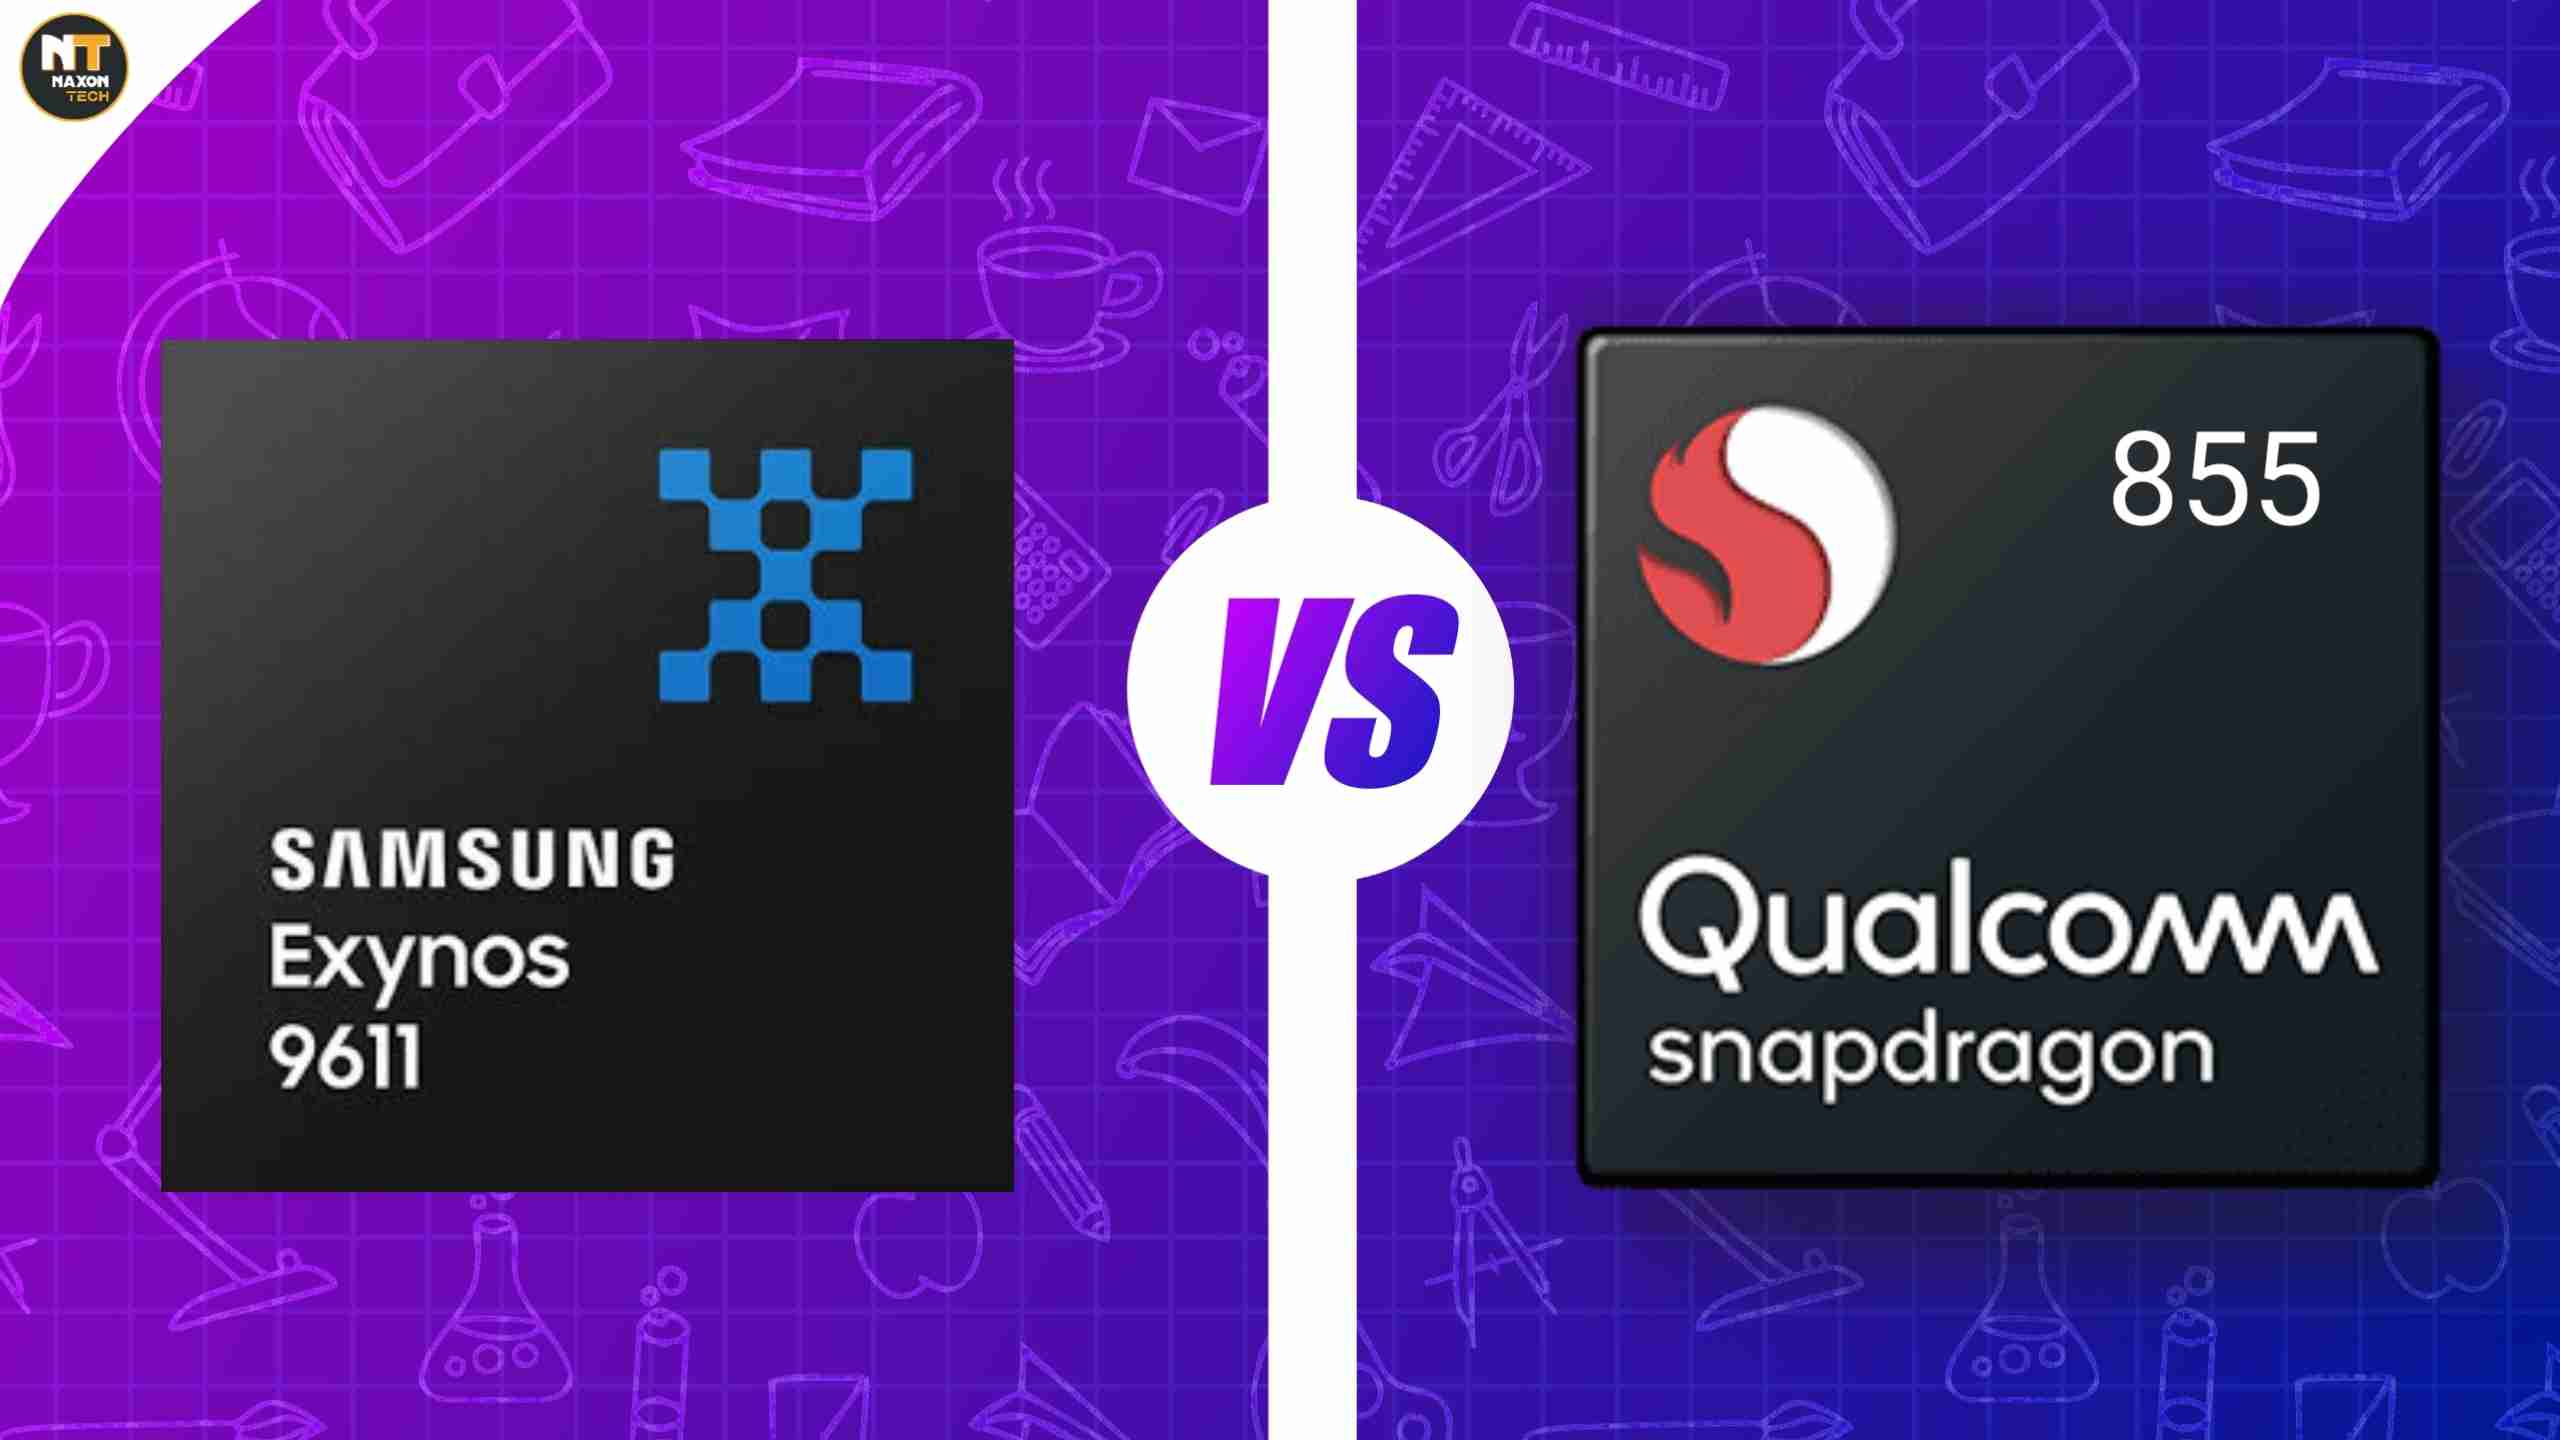 Samsung Exynos 9611 vs Snapdragon 855 – Detailed Comparison